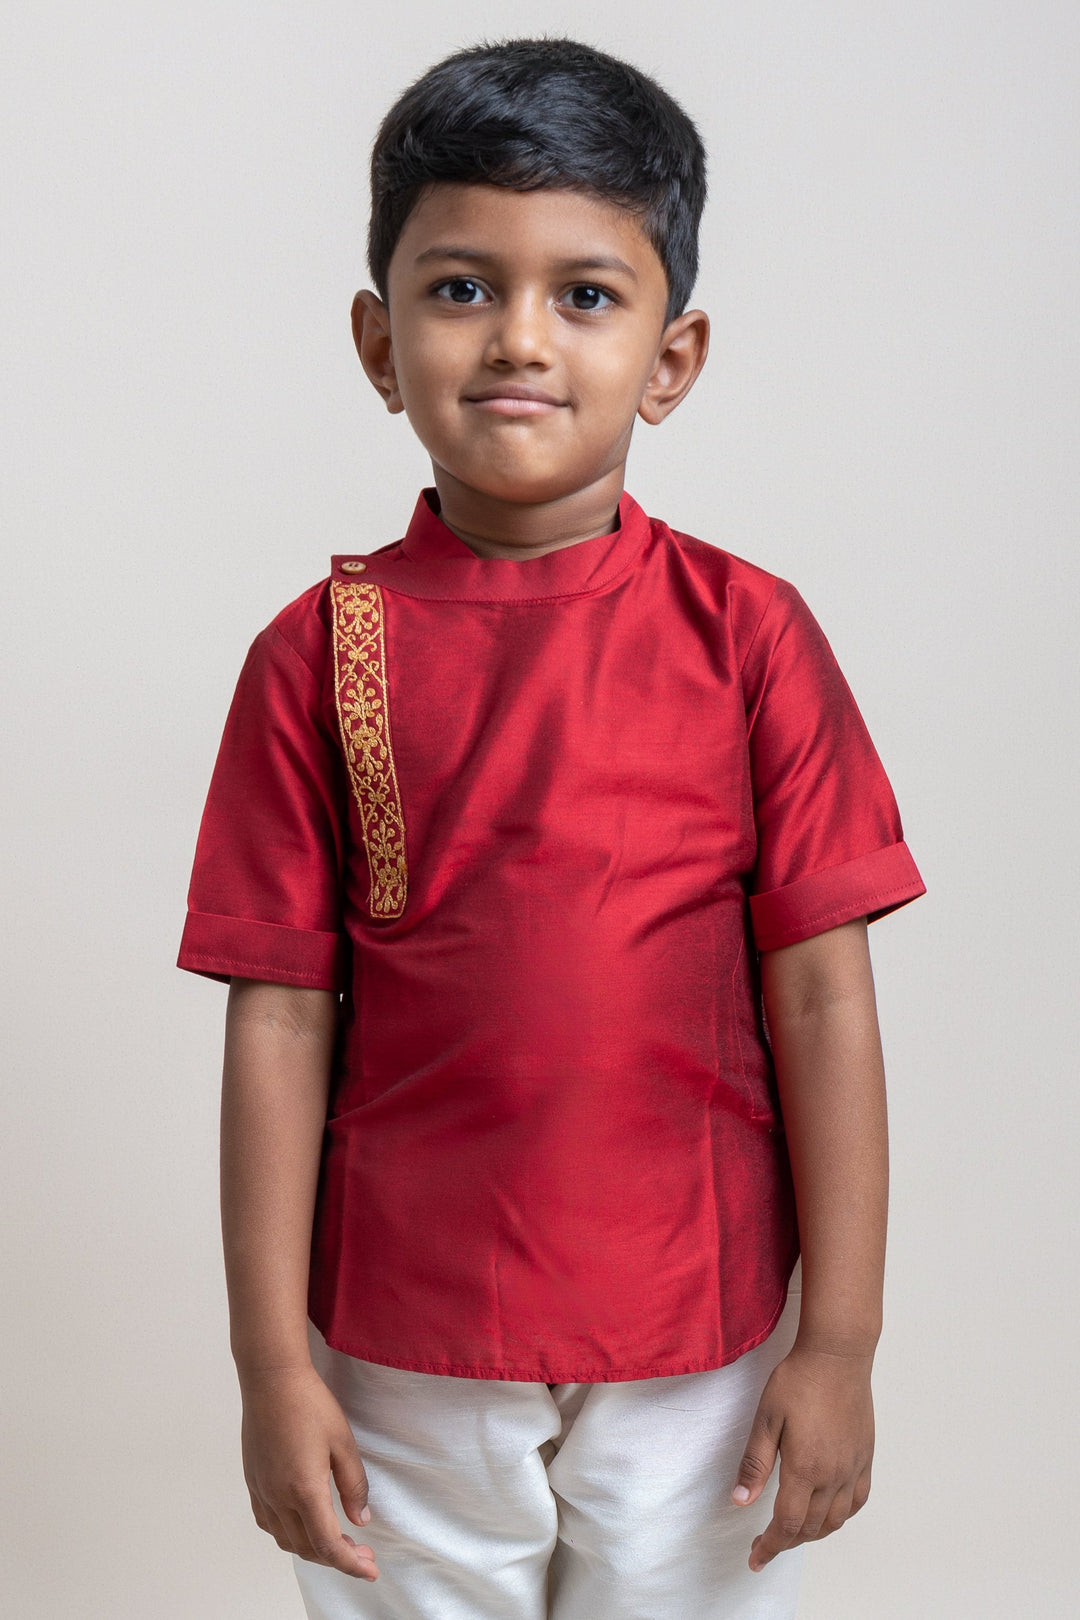 The Nesavu Boys Silk Shirt Gorgeous Red Soft Cotton Shirt For Little Boys Nesavu Ethnic Cotton Shirts For Boys | Premium Boys Wear | The Nesavu